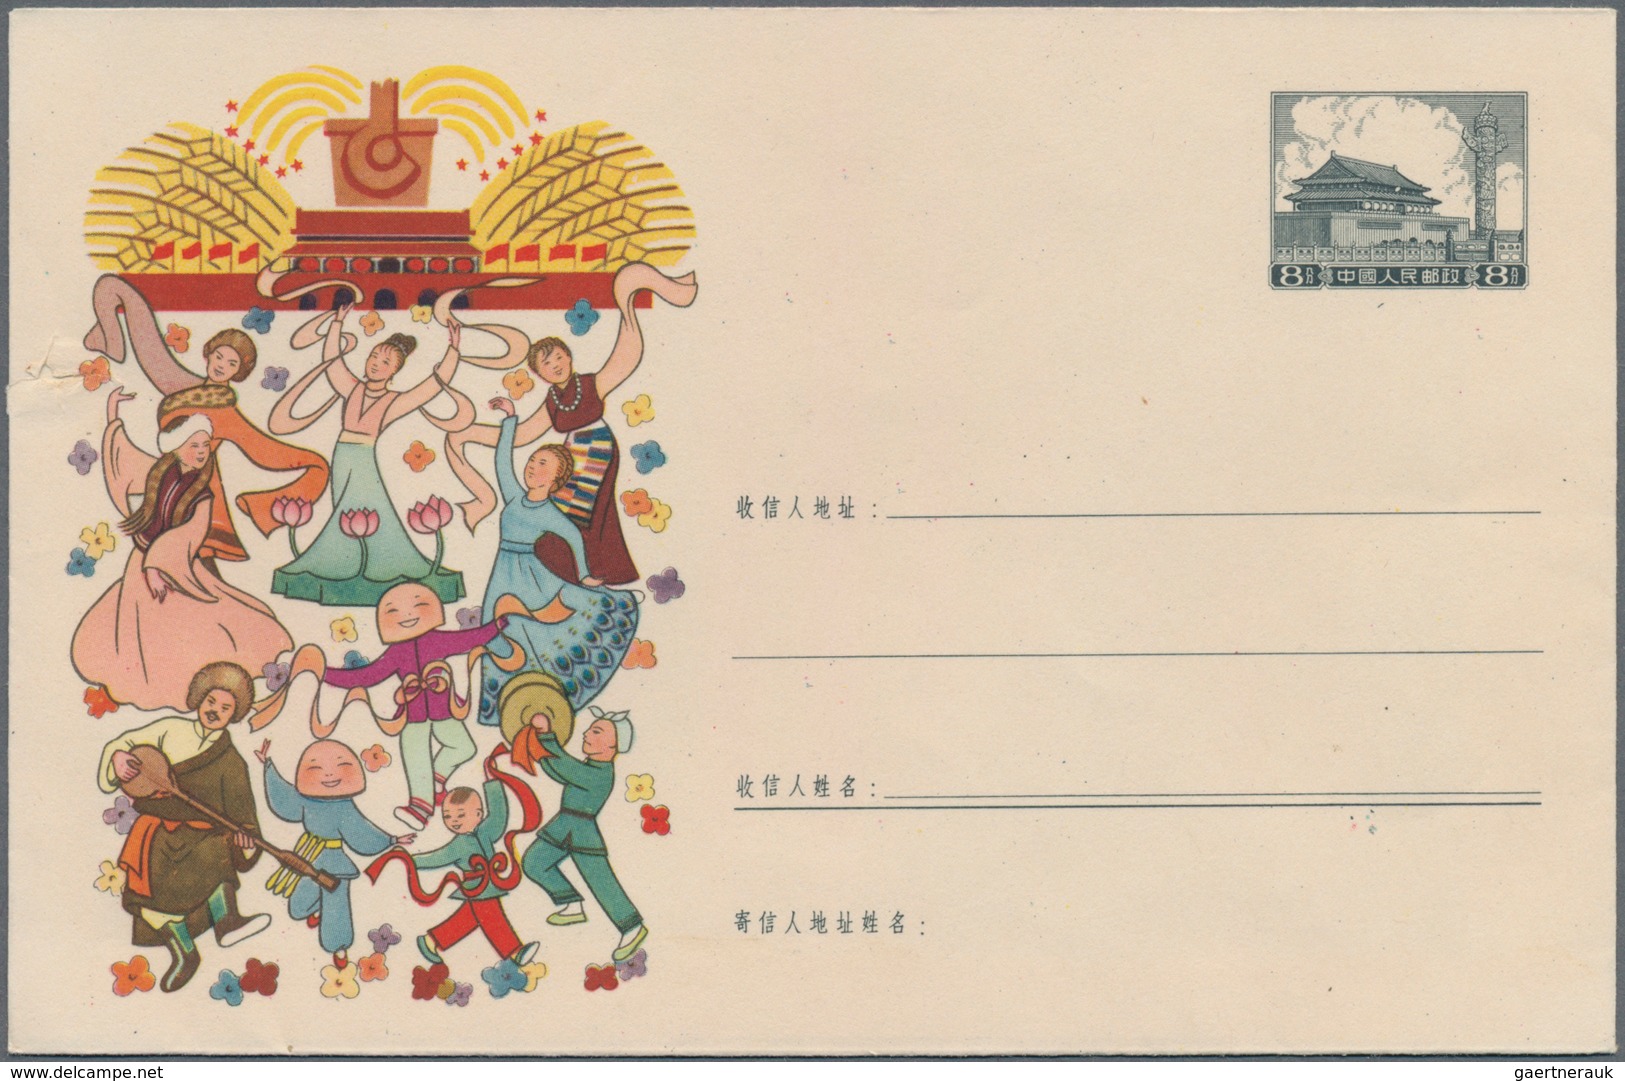 China - Volksrepublik - Ganzsachen: 1959, "arts envelopes" pictorial envelopes 8 F. grey (9) with im